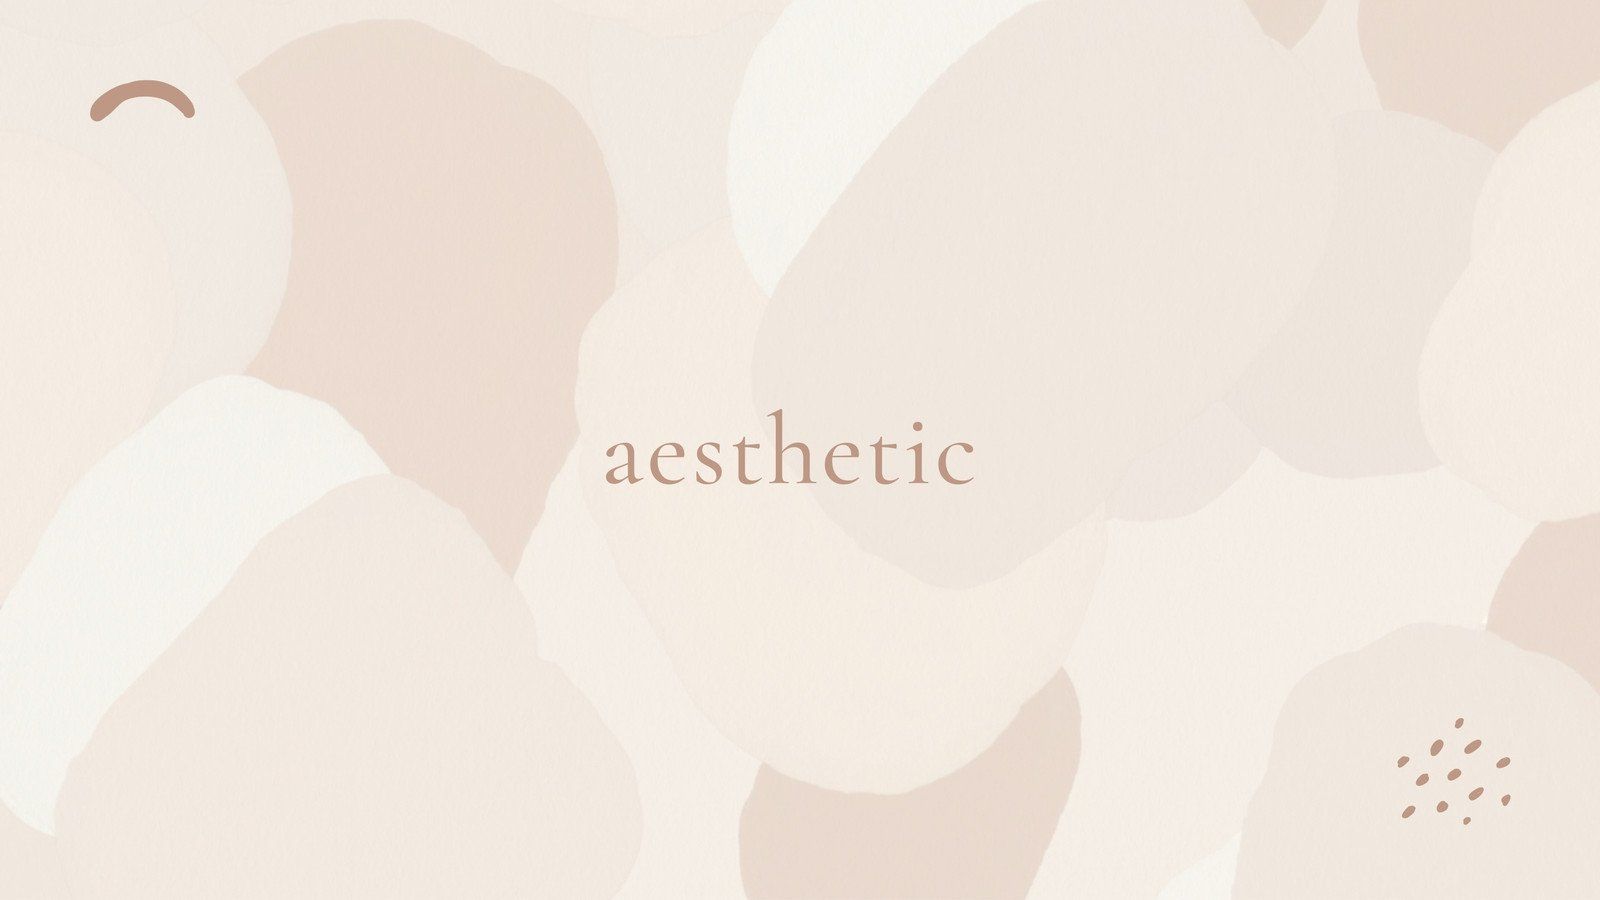 Aesthetic background image with the word aesthetic - Minimalist beige